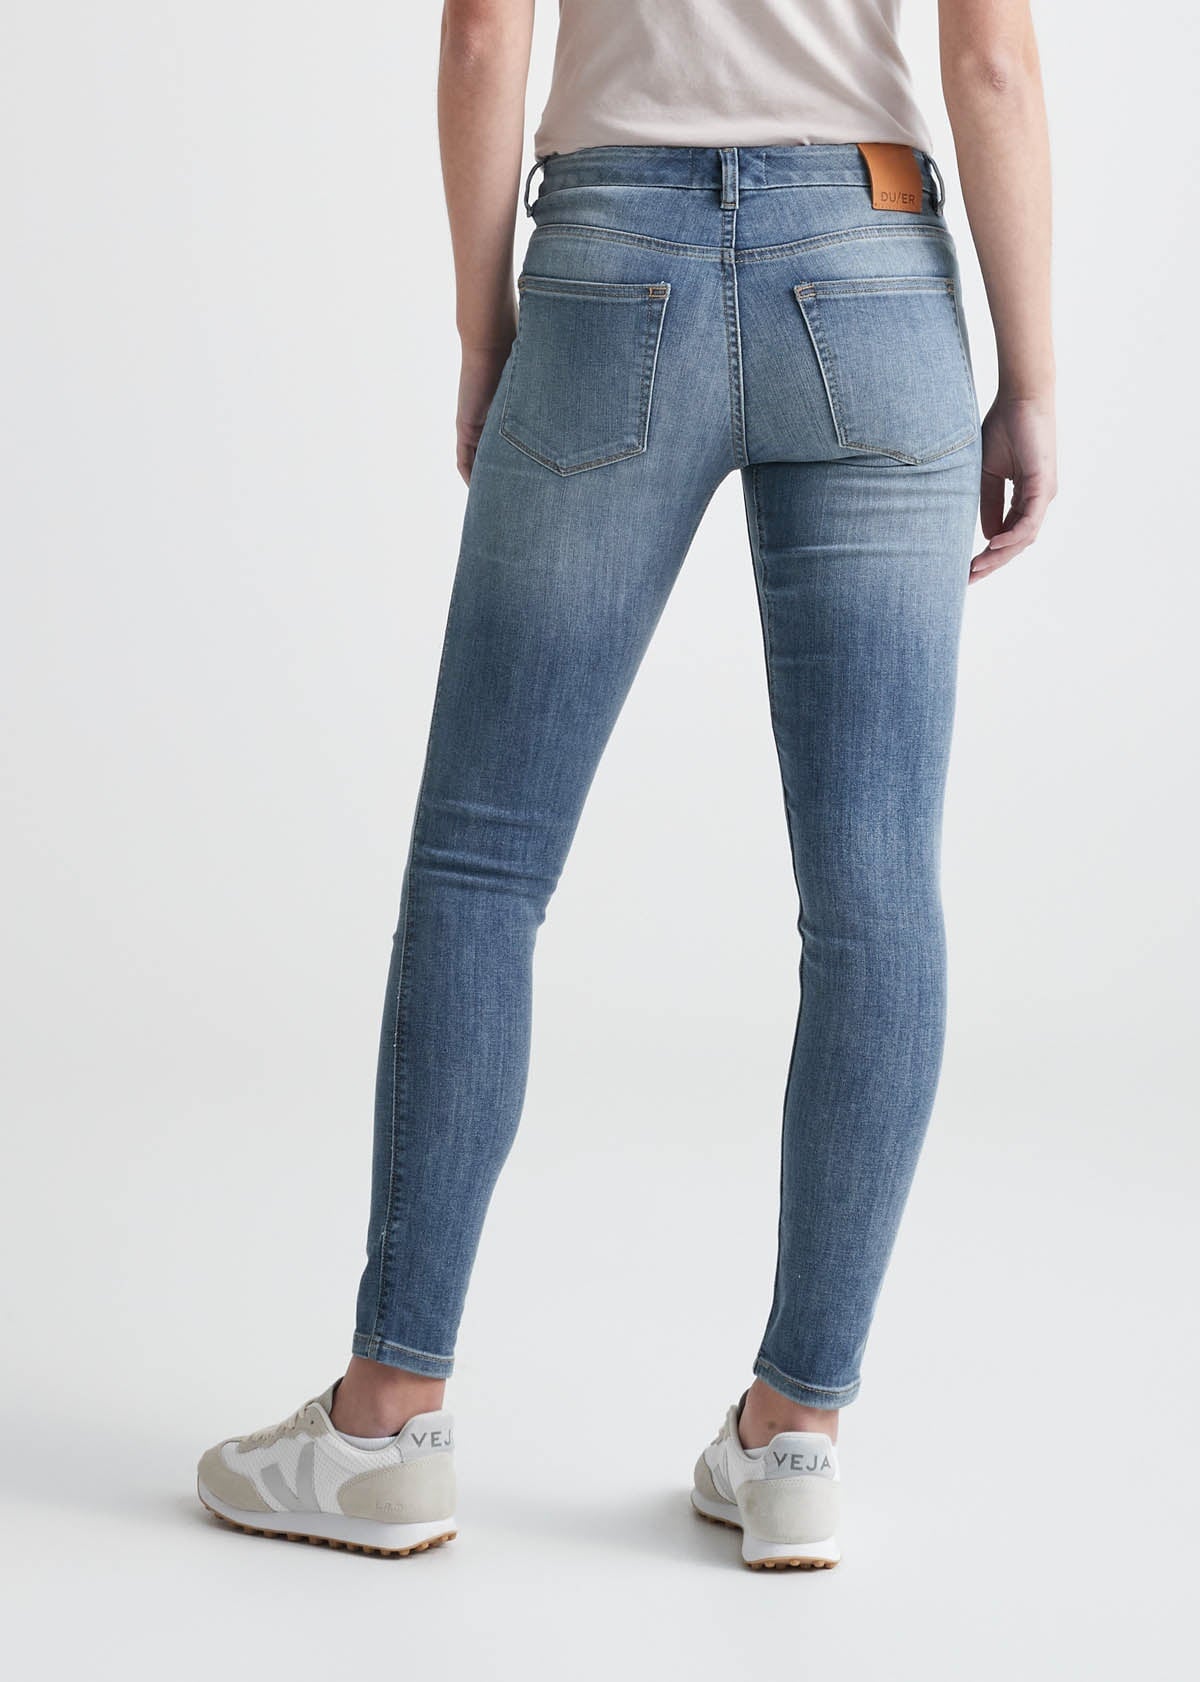 Buy Women's Blue Slim Mid Rise Jeans Online